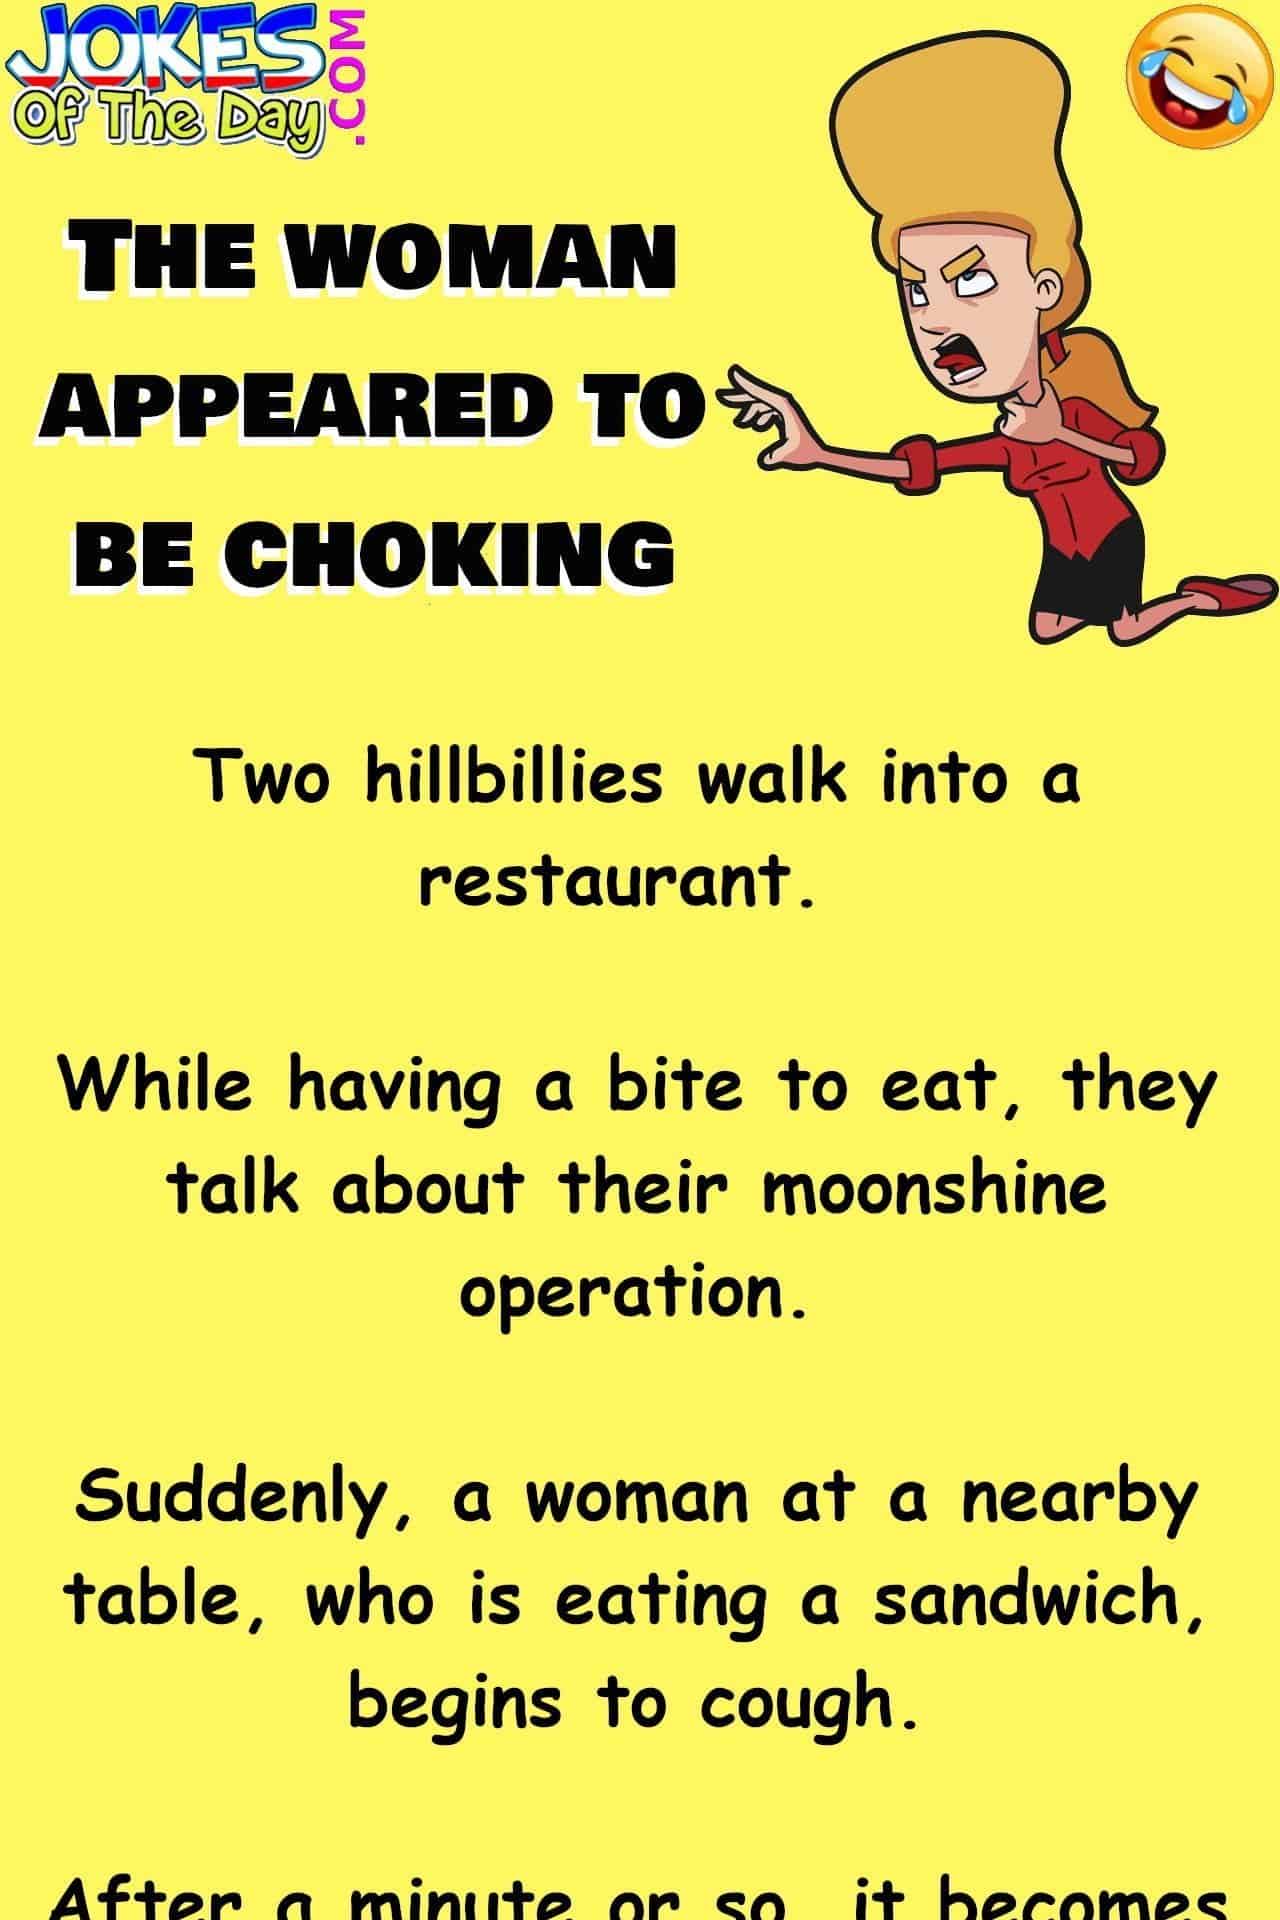 Funny Joke - The hillbilly saves the choking woman - jokesoftheday com